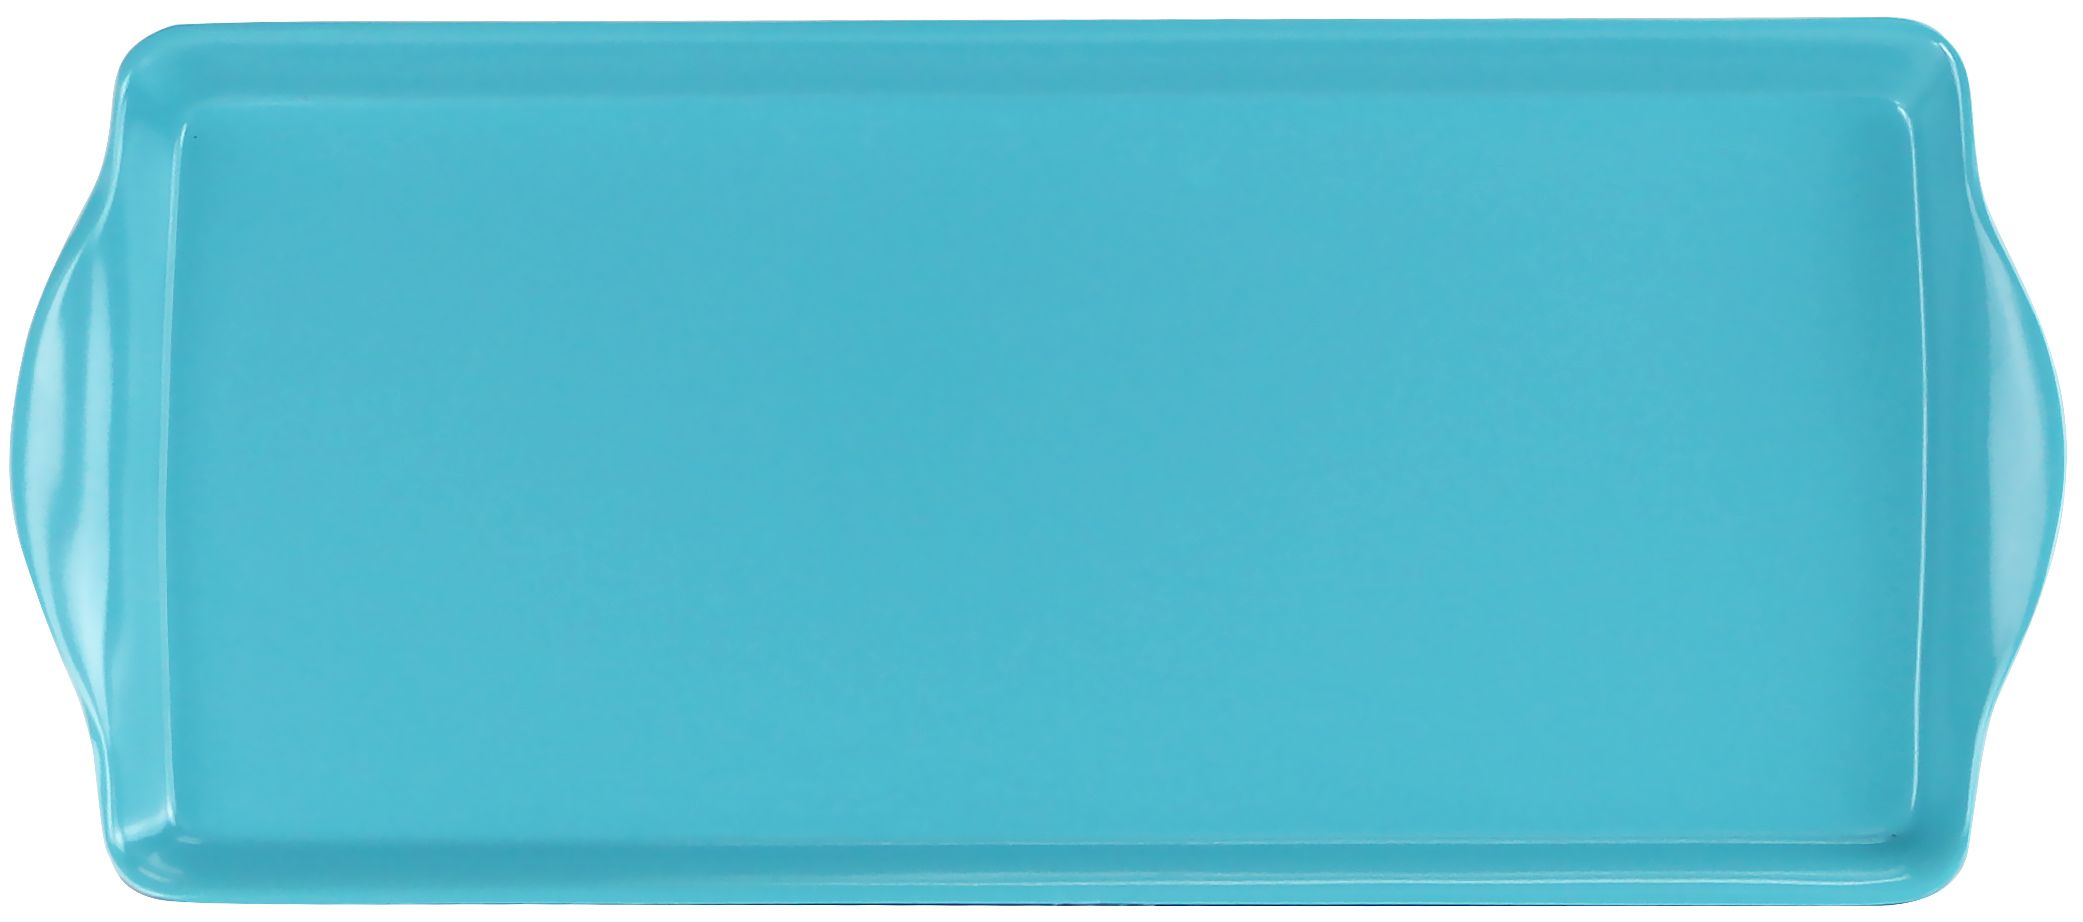 06702 Turquoise - Tidbit Tray